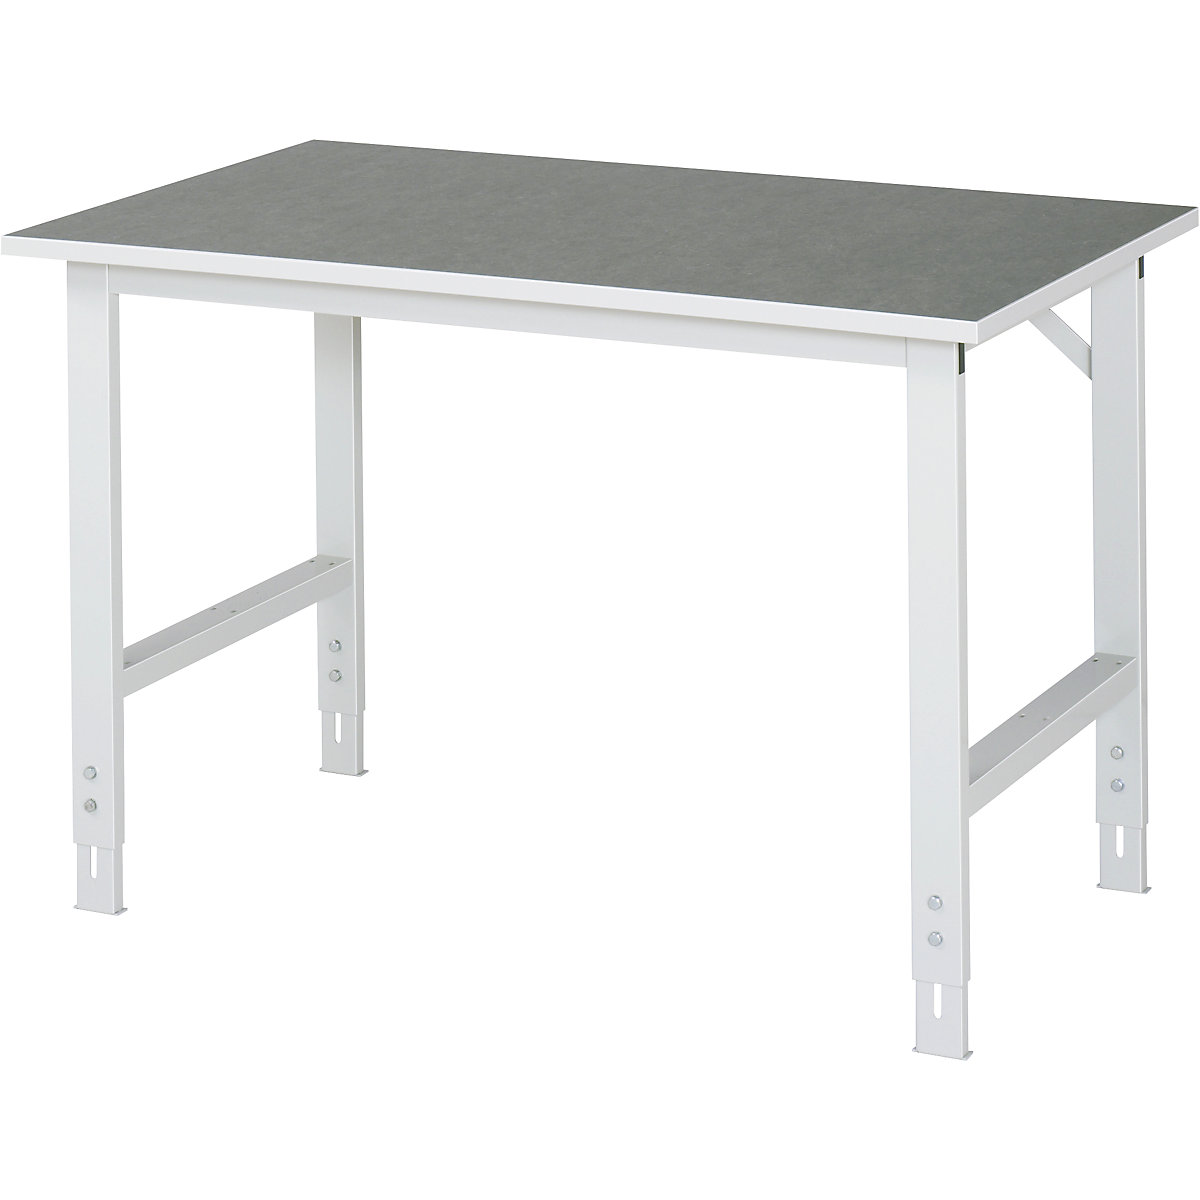 Werktafel, in hoogte verstelbaar – RAU, 760 – 1080 mm, linoleum blad, b x d = 1250 x 800 mm, lichtgrijs-9